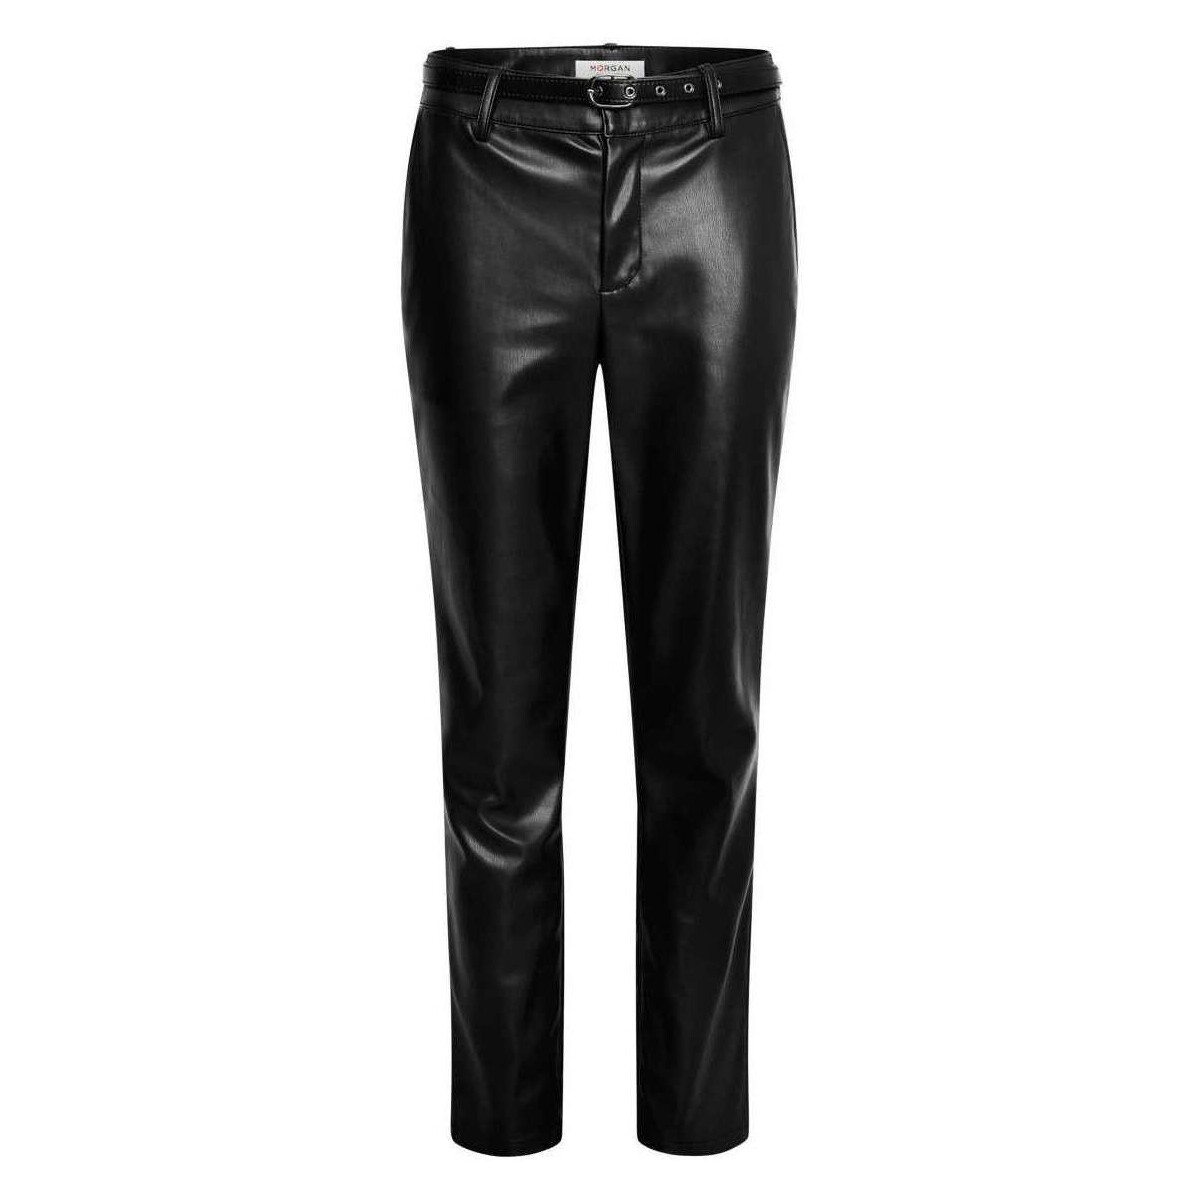 Vêtements Femme Pantalons 5 poches Morgan 155800VTAH23 Noir